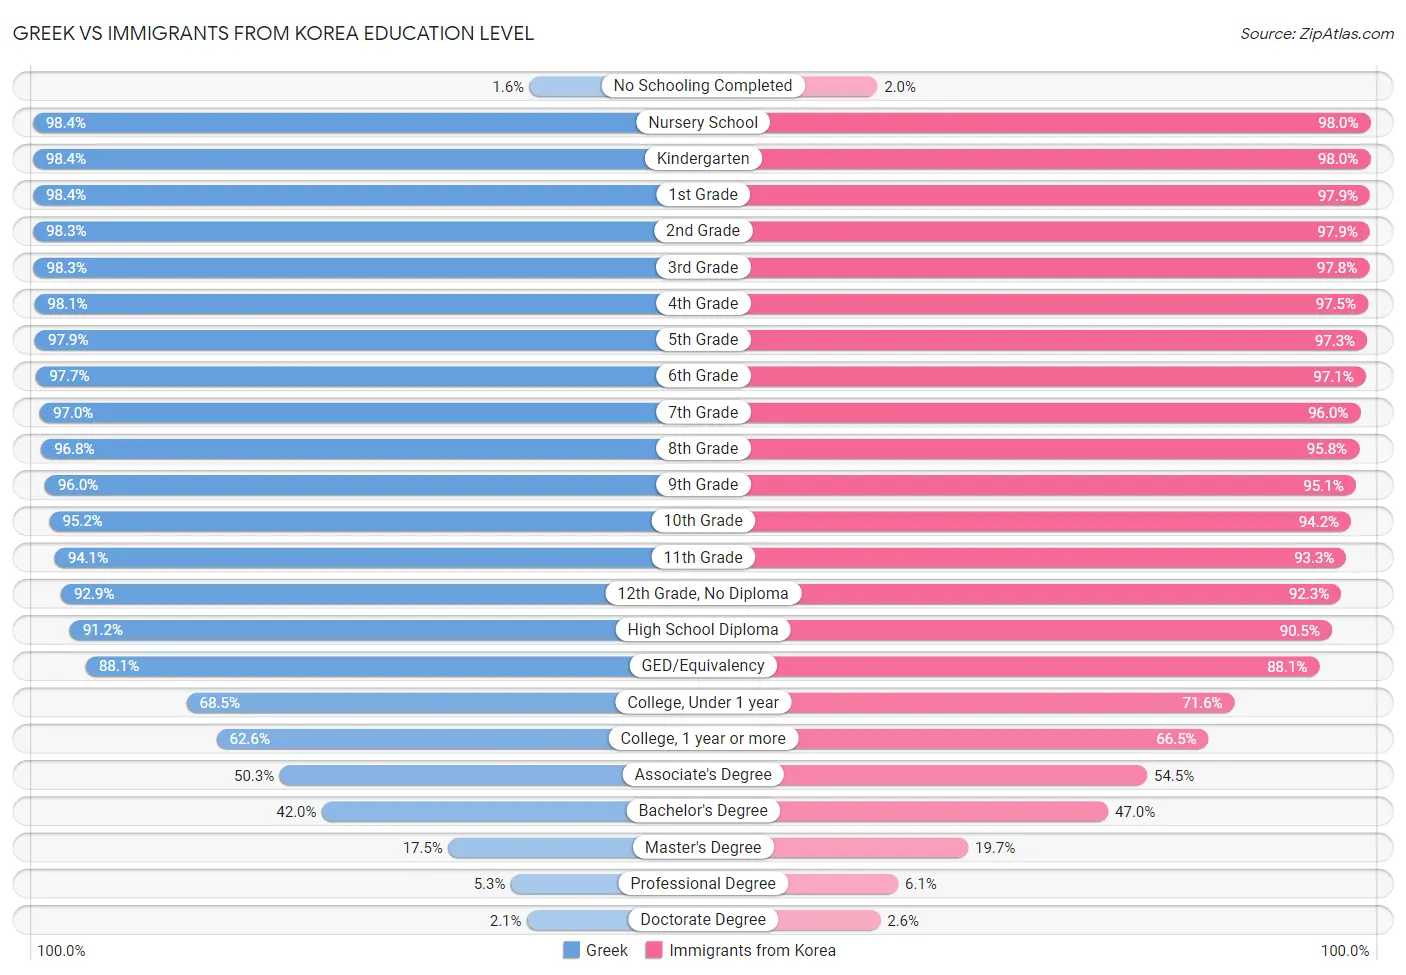 Greek vs Immigrants from Korea Education Level